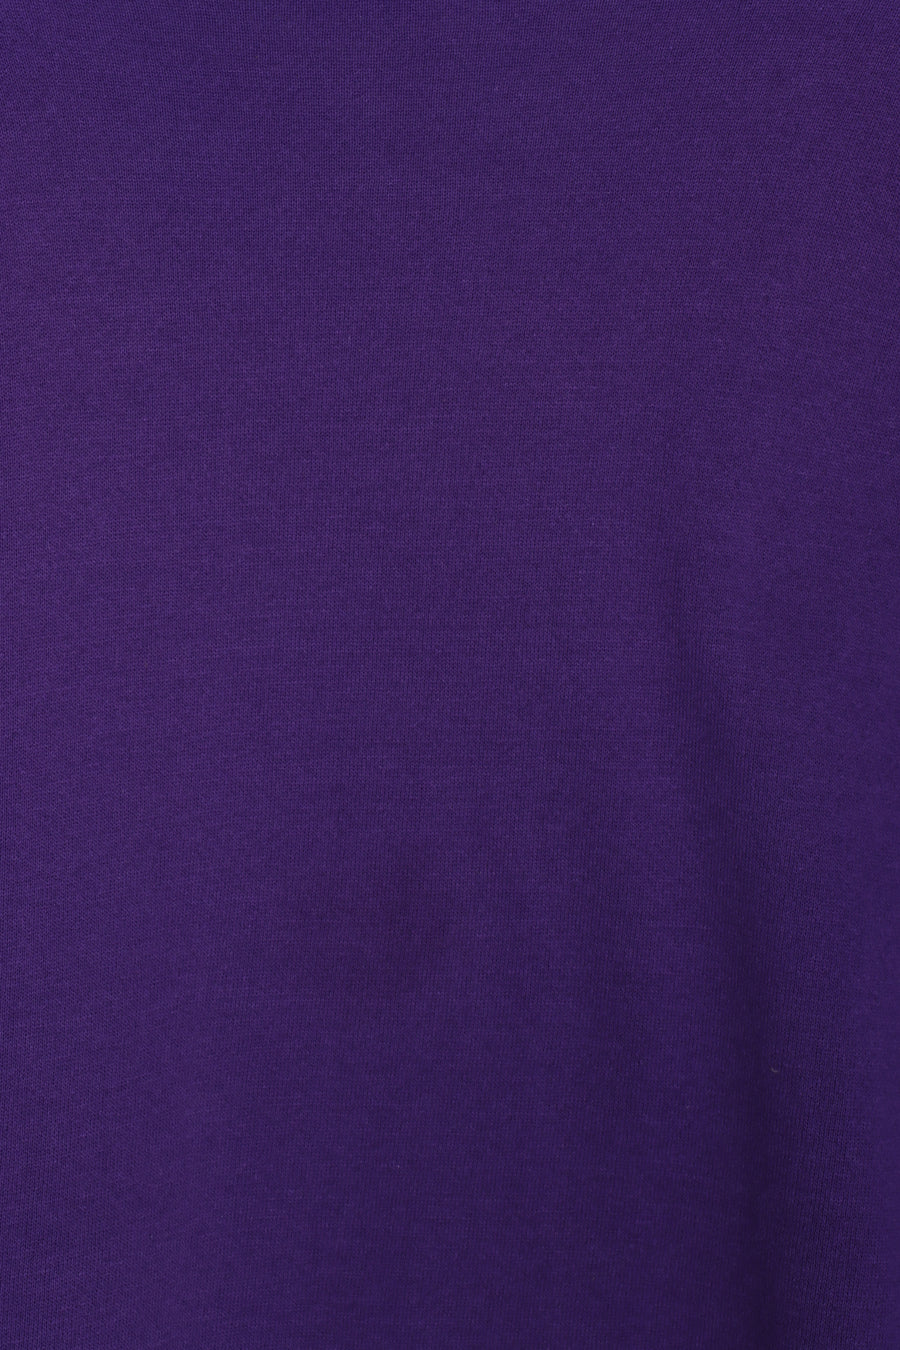 DISNEY World Mickey Mouse 25 Years Sorcerer Purple Sweatshirt (XL)